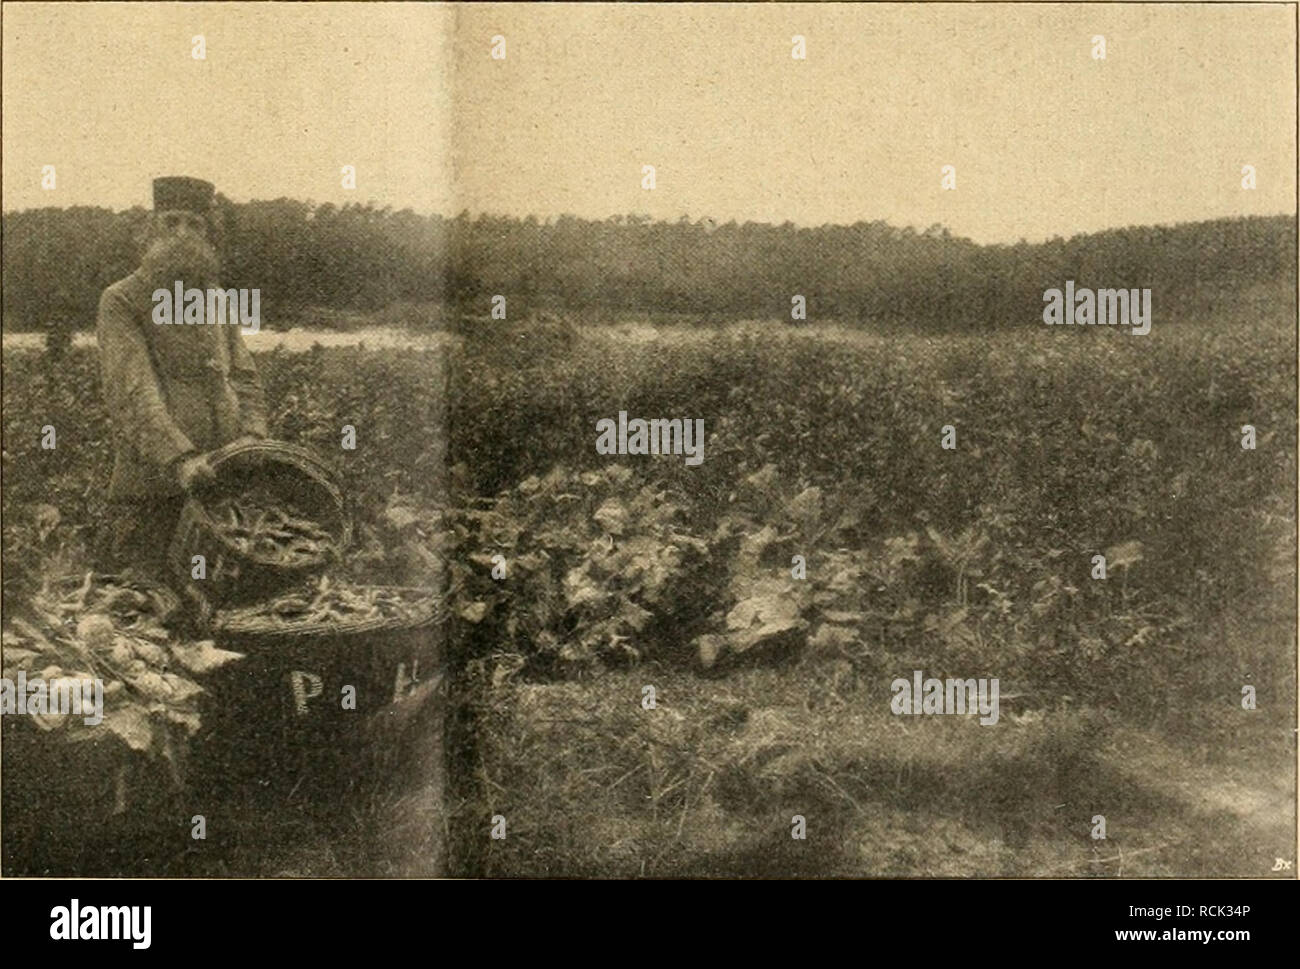 Alamy luise alta - Gute e fotografías imágenes resolución de